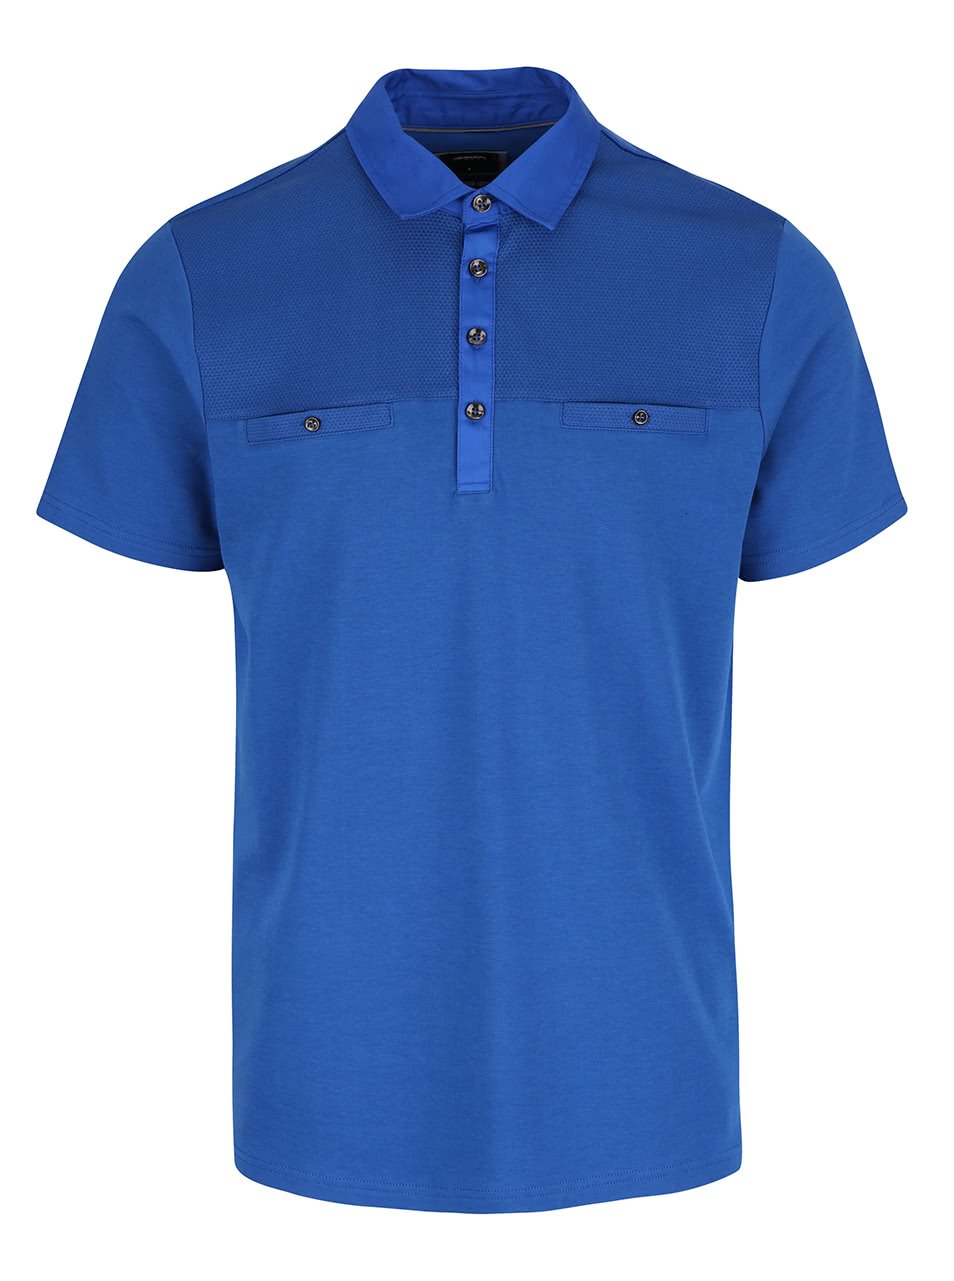 Modré polo triko s falešnými kapsami Burton Menswear London